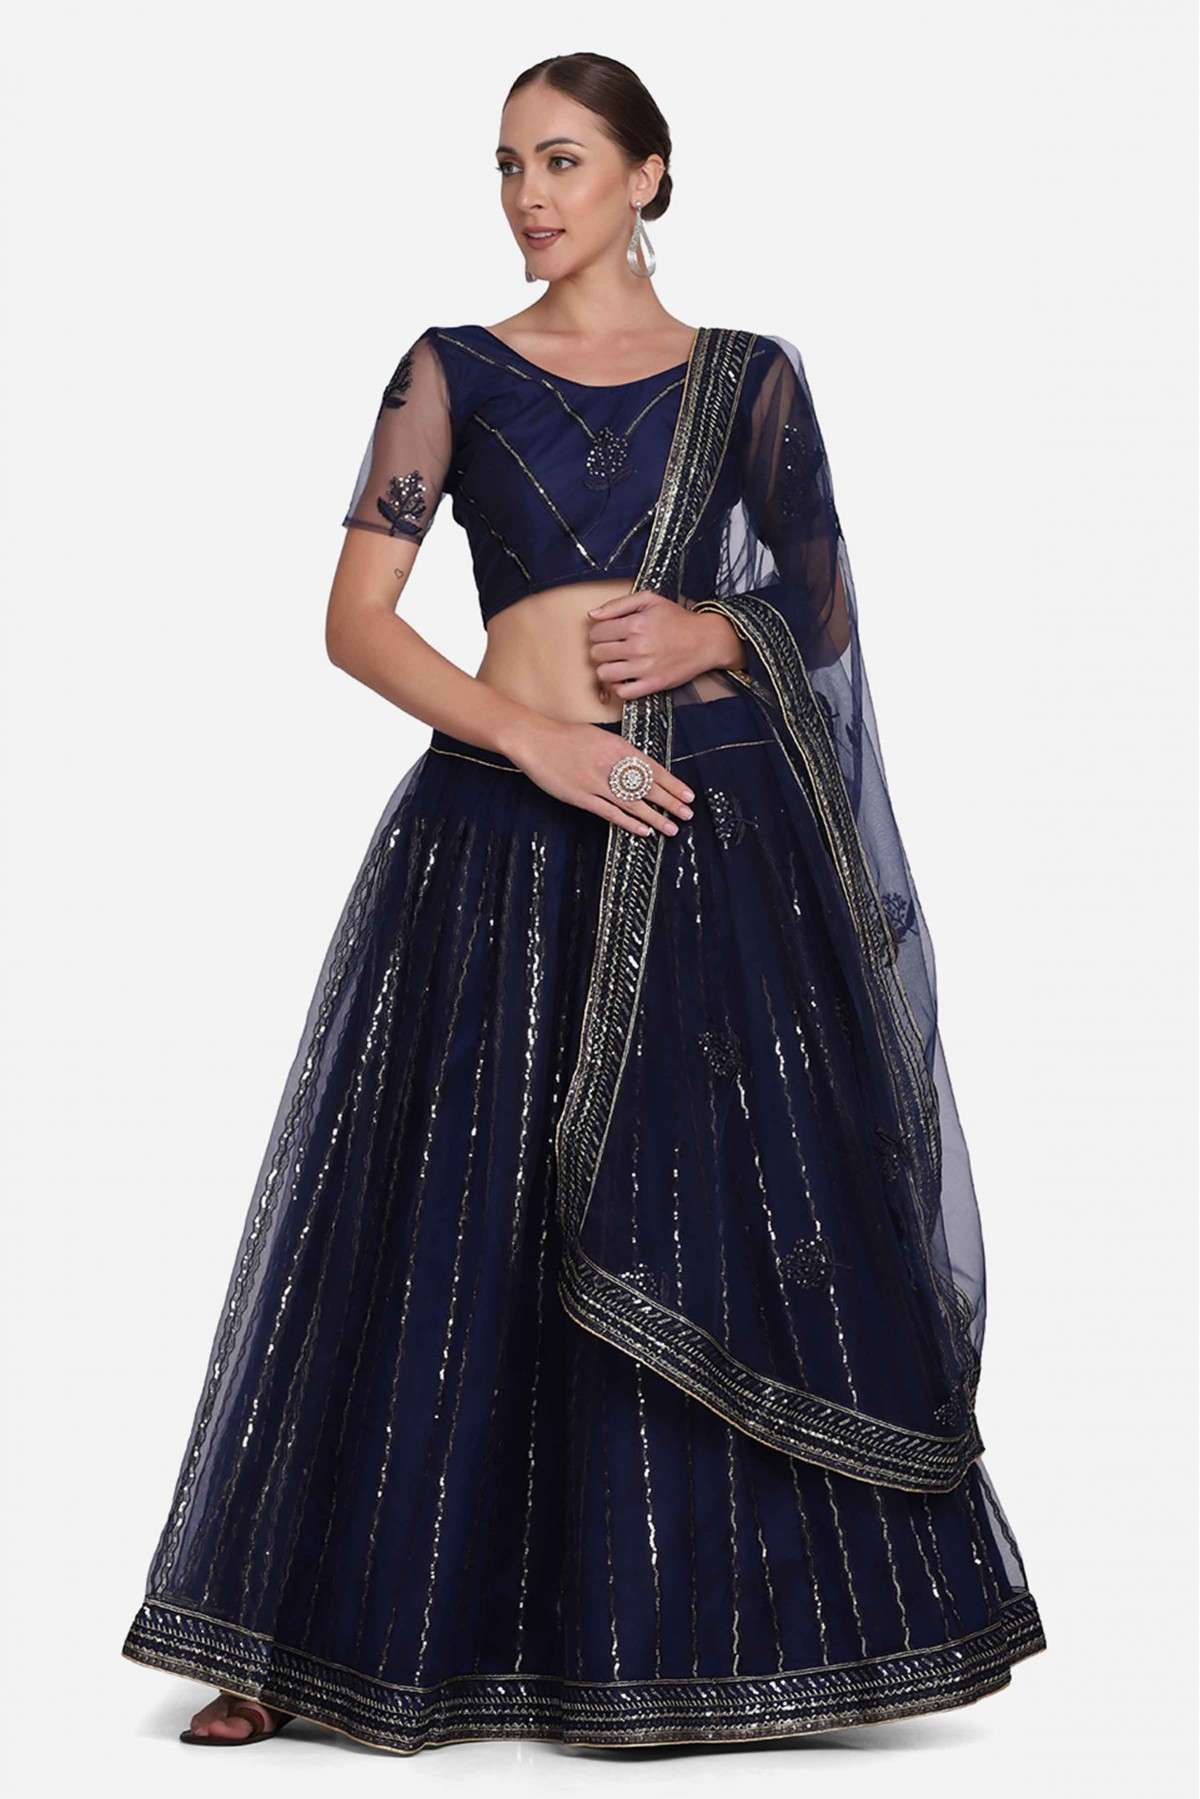 Net Embroidery Lehenga Choli In Blue Colour - LD5680338